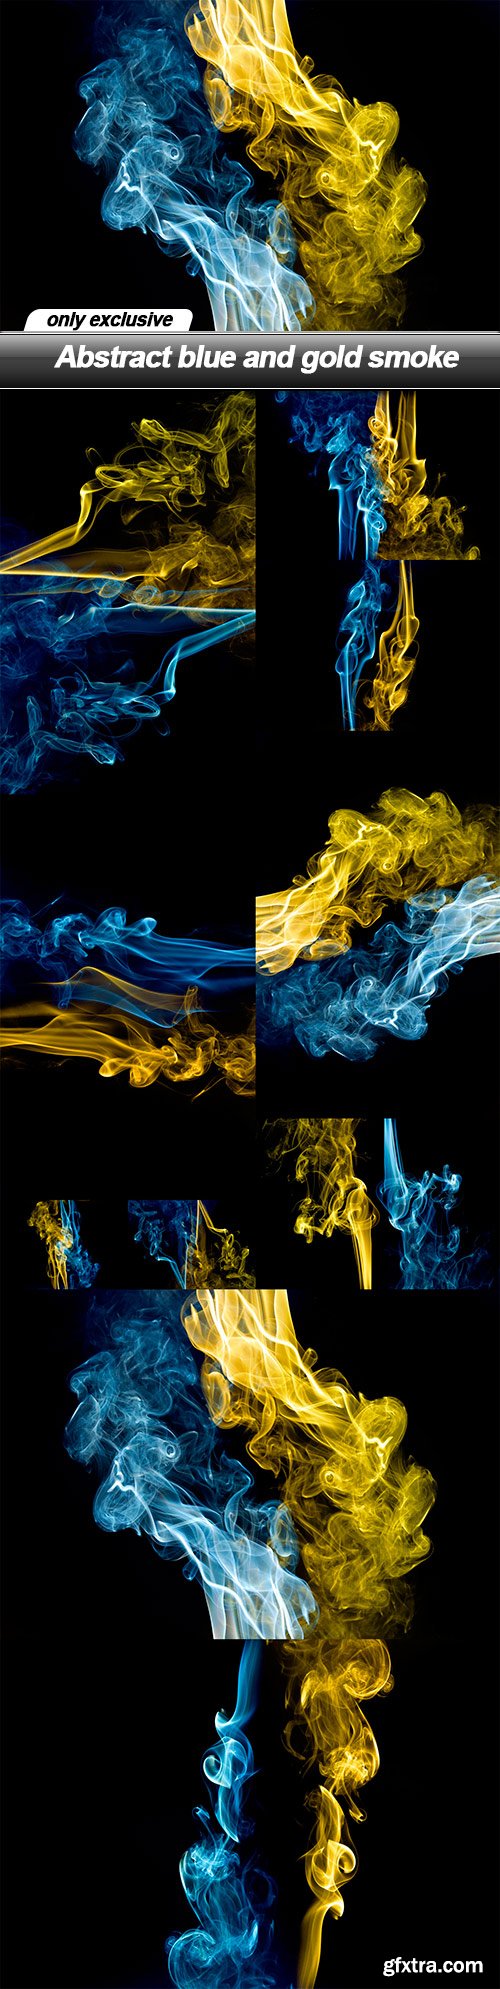 Abstract blue and gold smoke - 10 UHQ JPEG